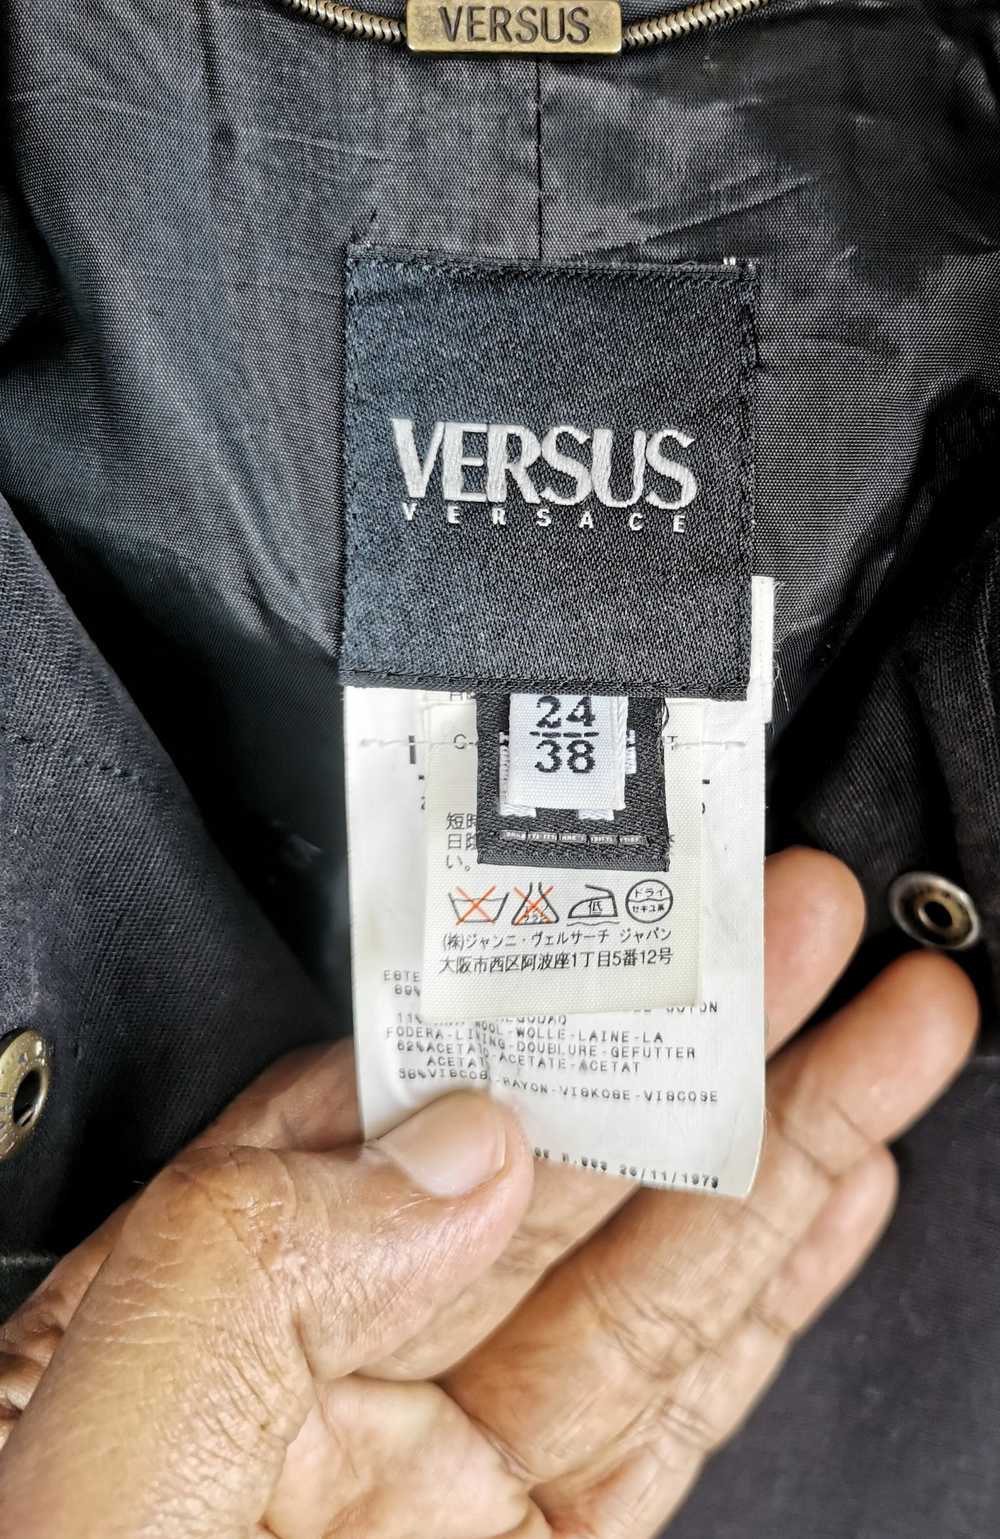 Versus Versace Luxury Versus Versace Long Jacket - image 4